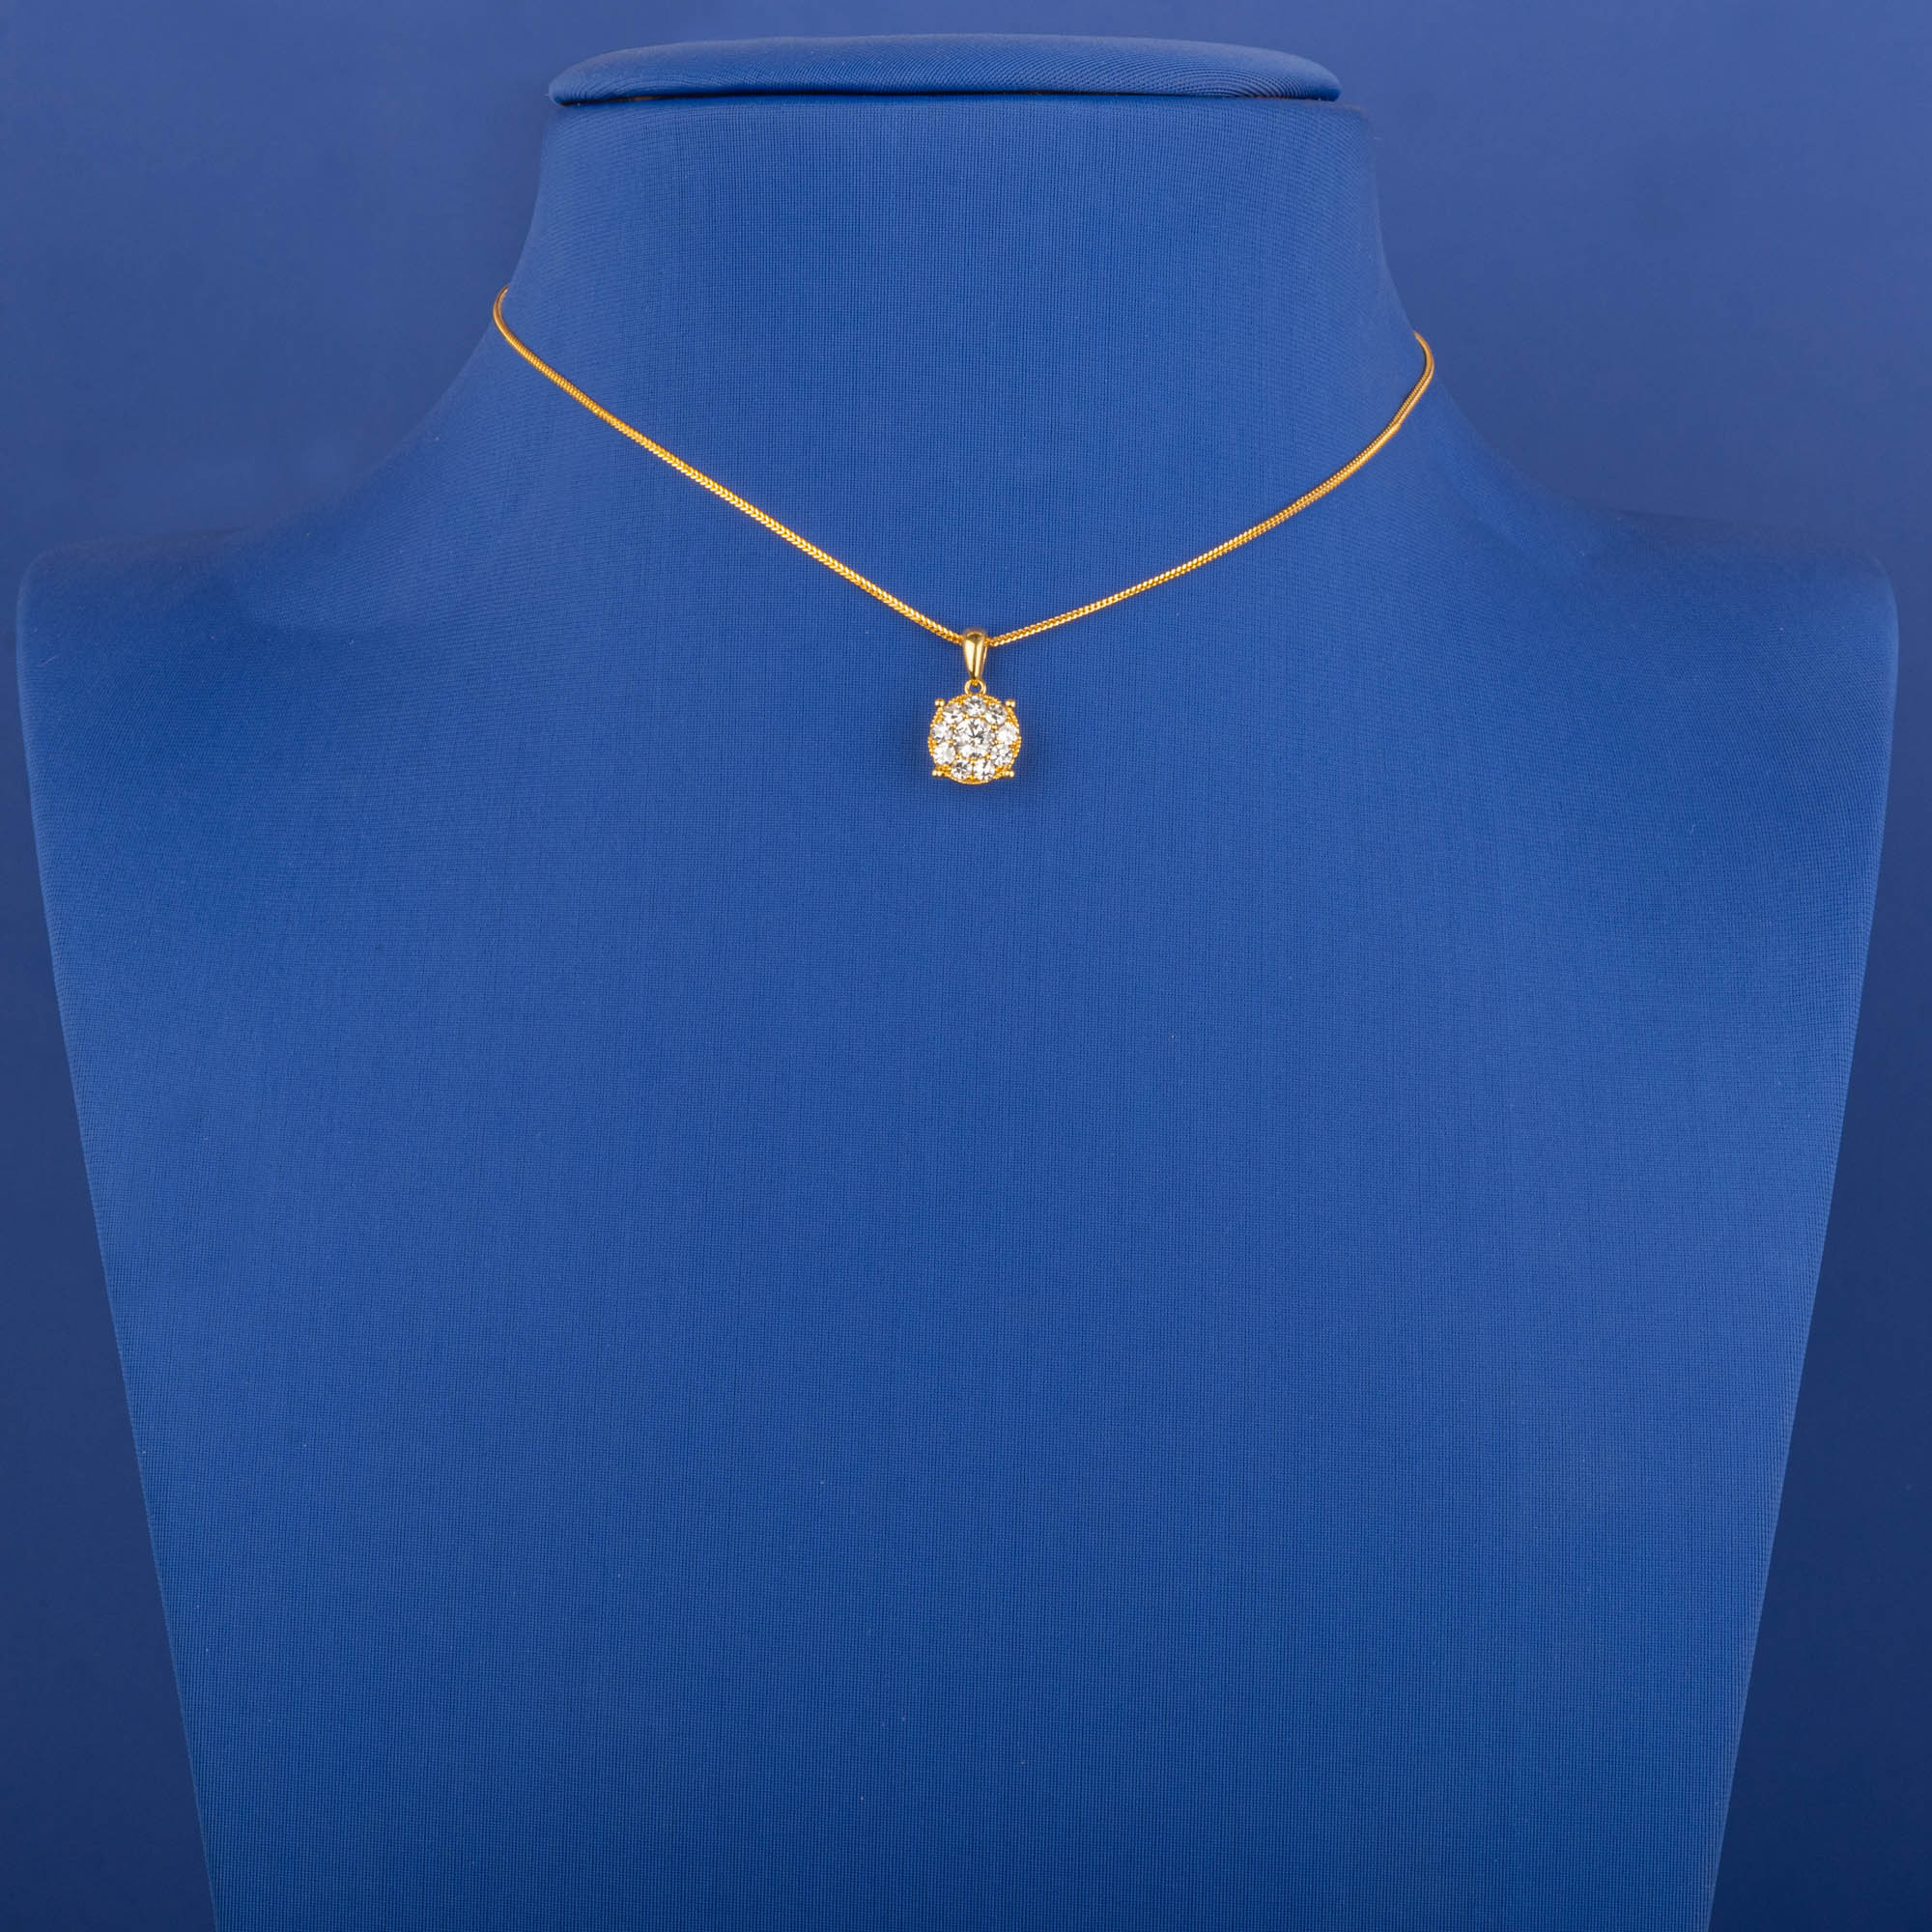 Handmade 18k Yellow Gold Diamond Pendant (chain not included)